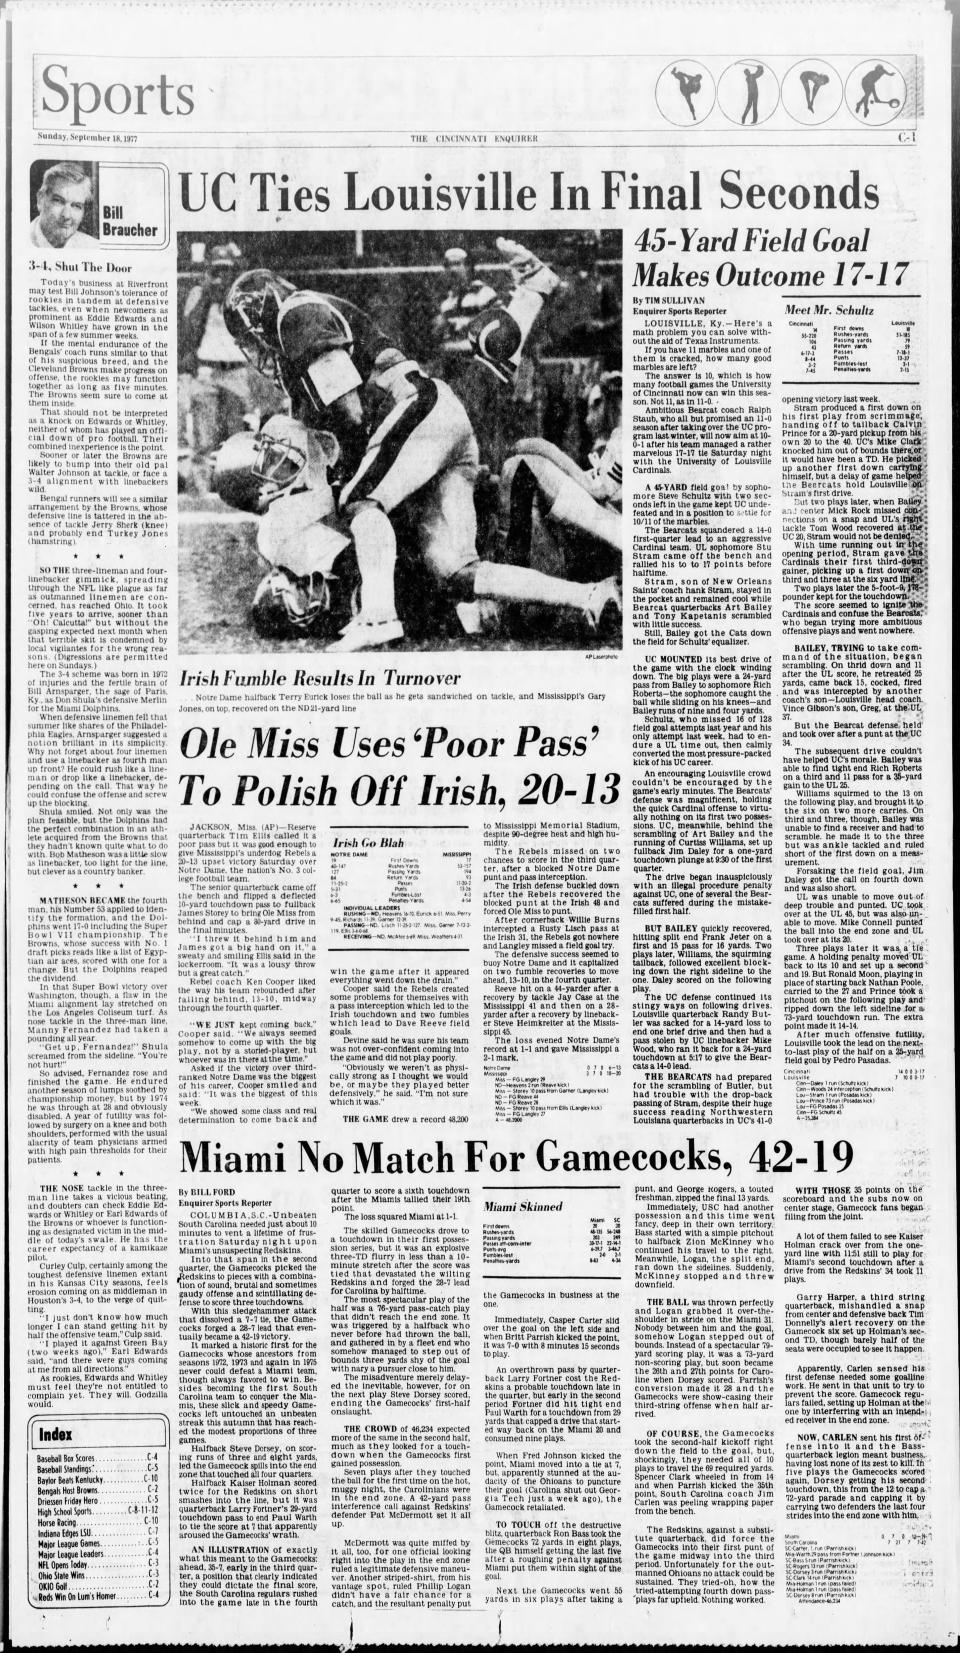 Sept. 18, 1977 Cincinnati Enquirer coverage of Cincinnati vs. Louisville football game.